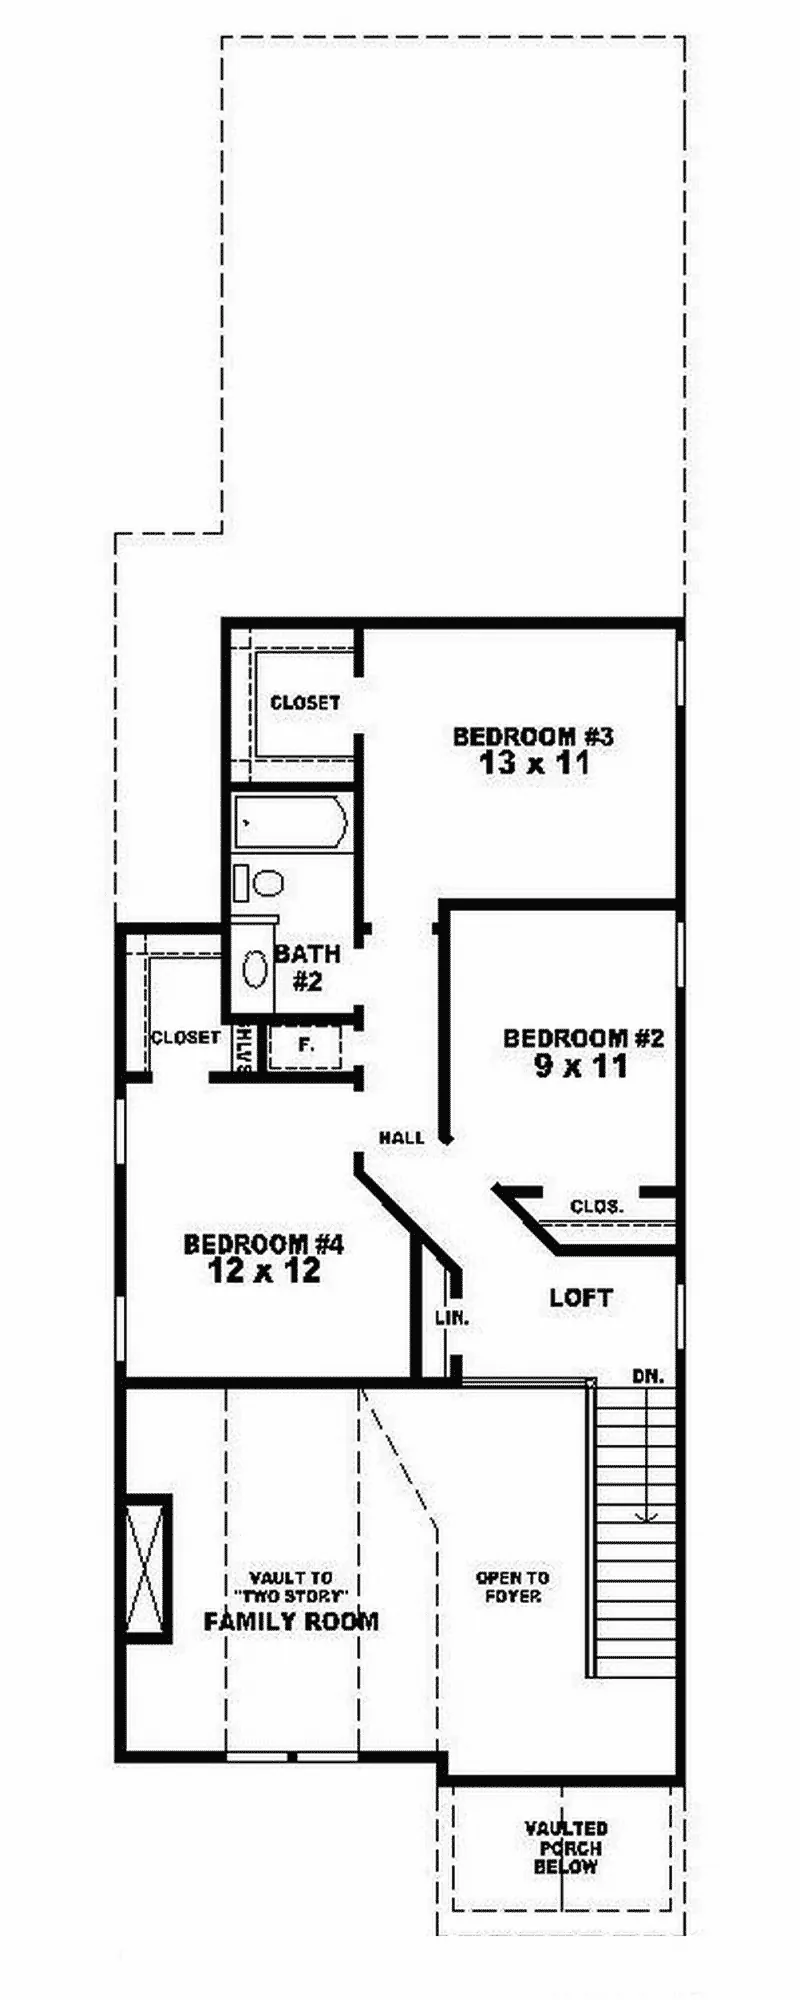 Shingle House Plan Second Floor - Morgan Acres Narrow Lot Home 087D-0146 - Shop House Plans and More